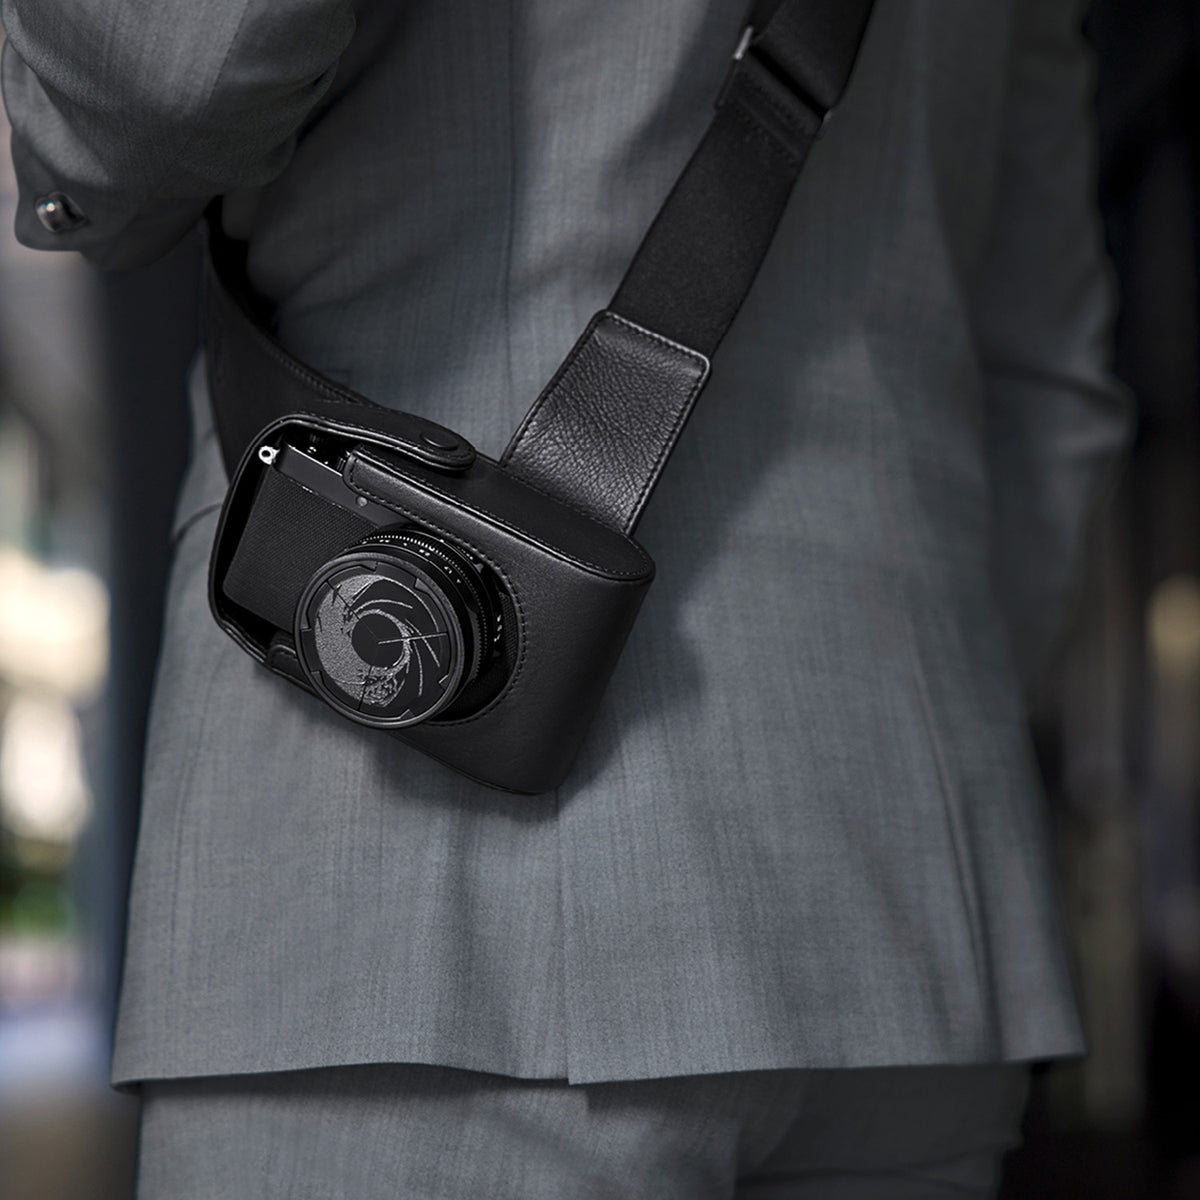 James Bond Leica D-Lux 7 007 Camera